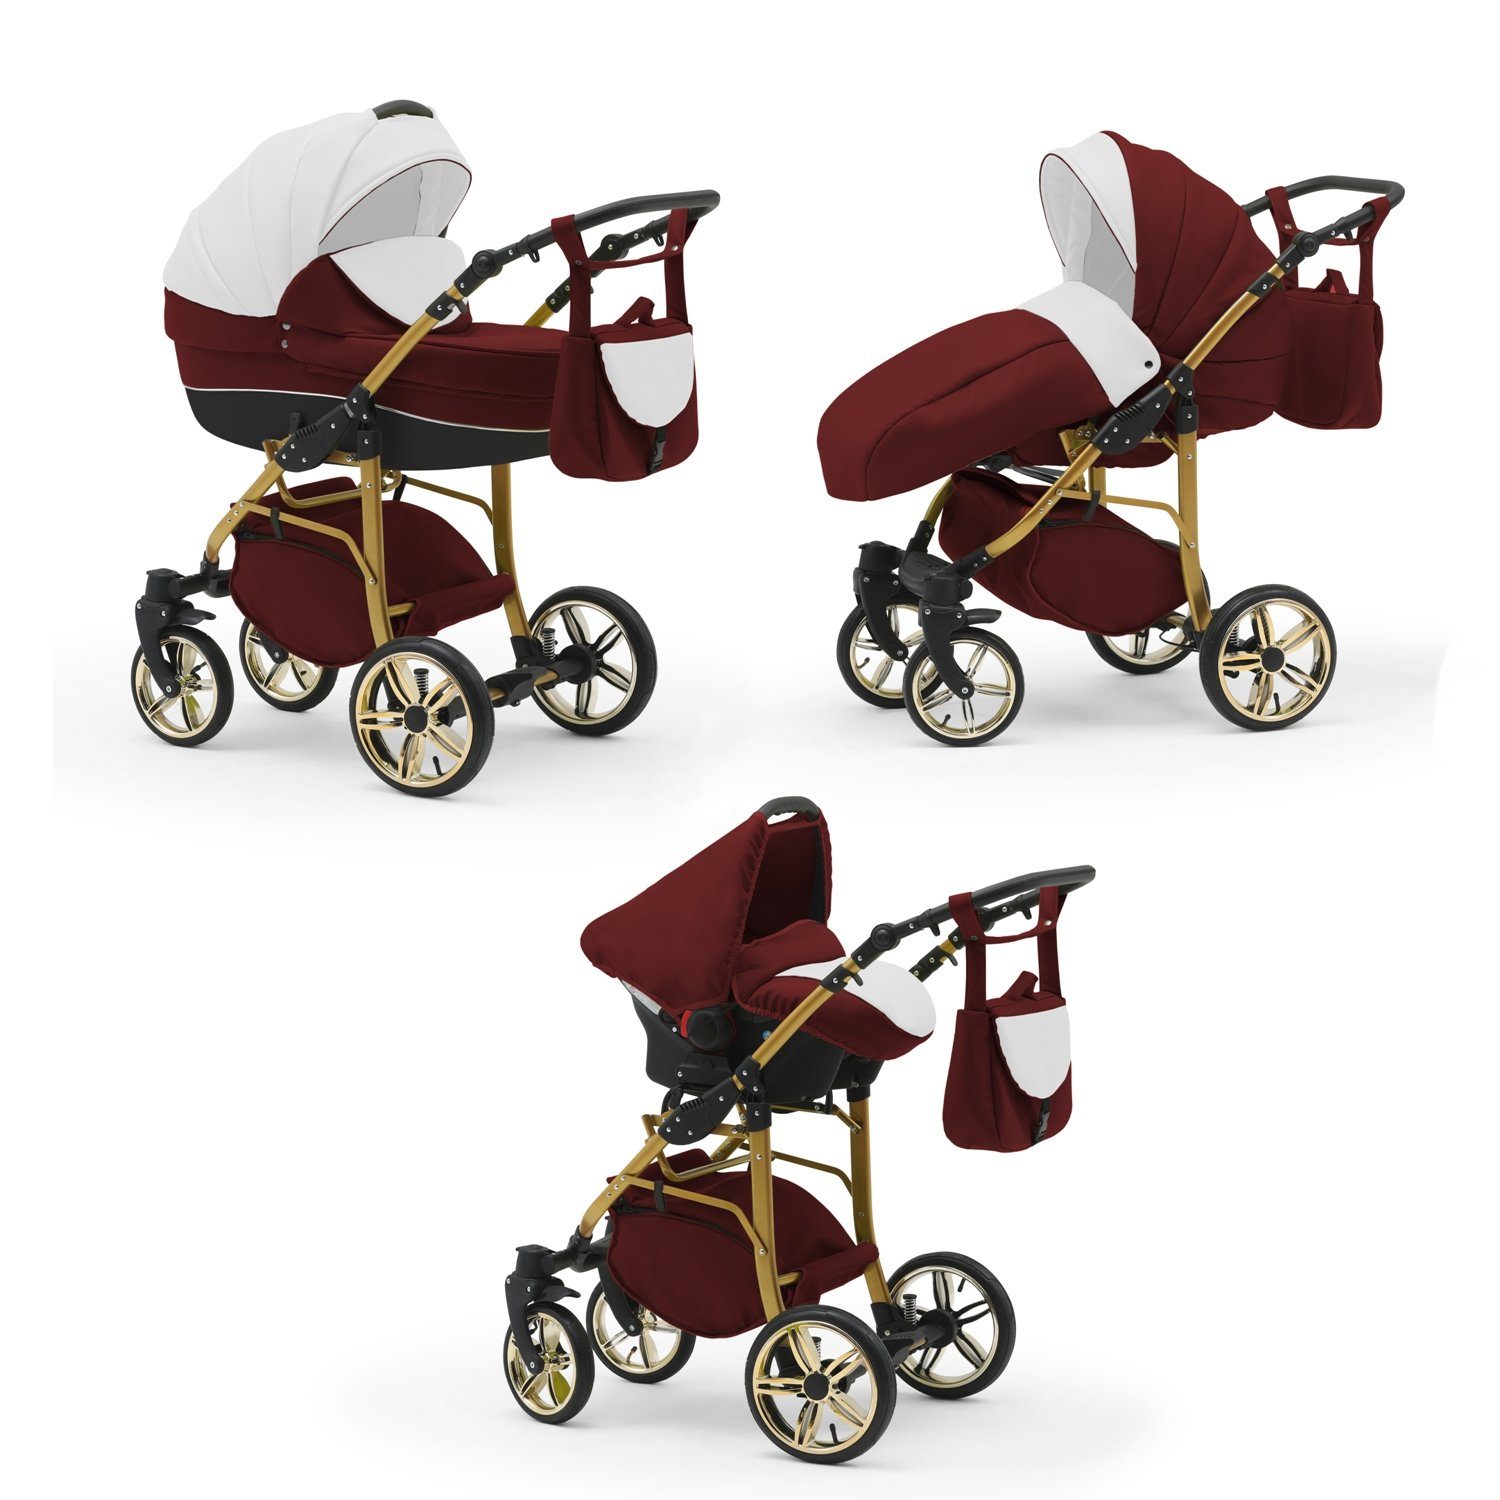 babies-on-wheels 1 46 Kombi-Kinderwagen Cosmo Farben in Kinderwagen-Set 3 Gold- in - 16 Bordeaux-Weiß-Schwarz Teile